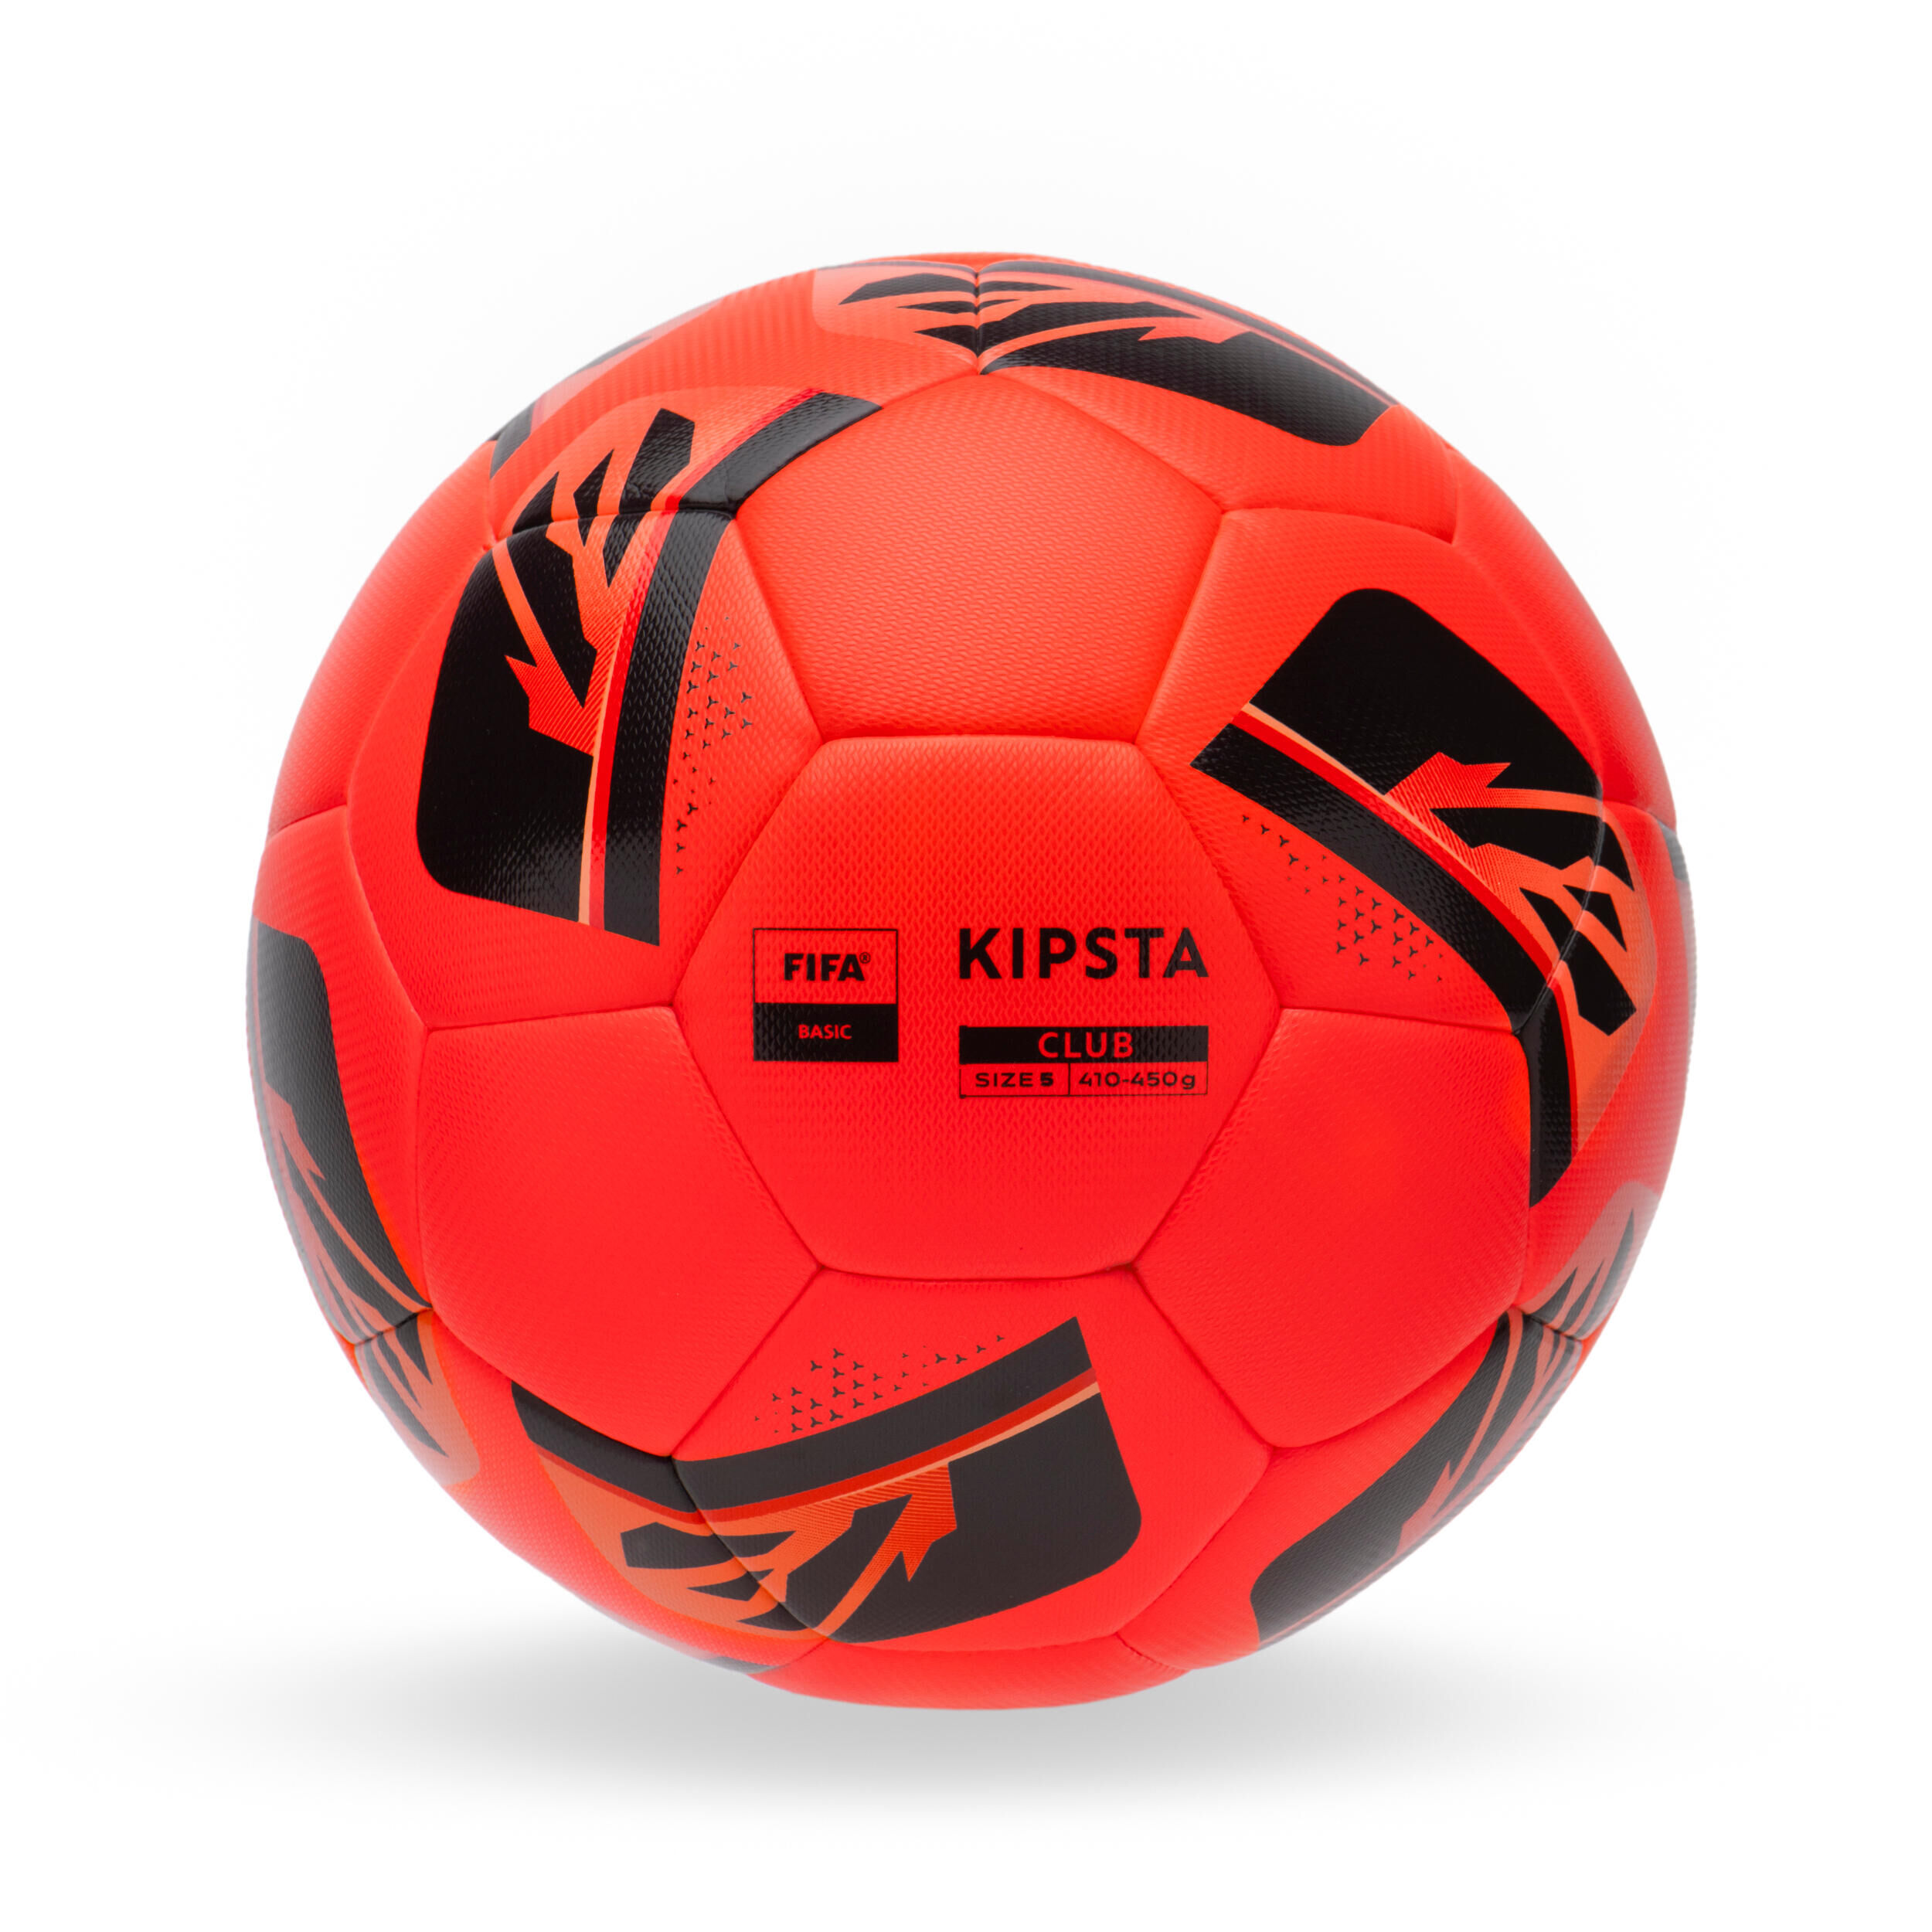 KIPSTA Size 5 FIFA Basic Football Club Hybrid - Red/Snow and Fog